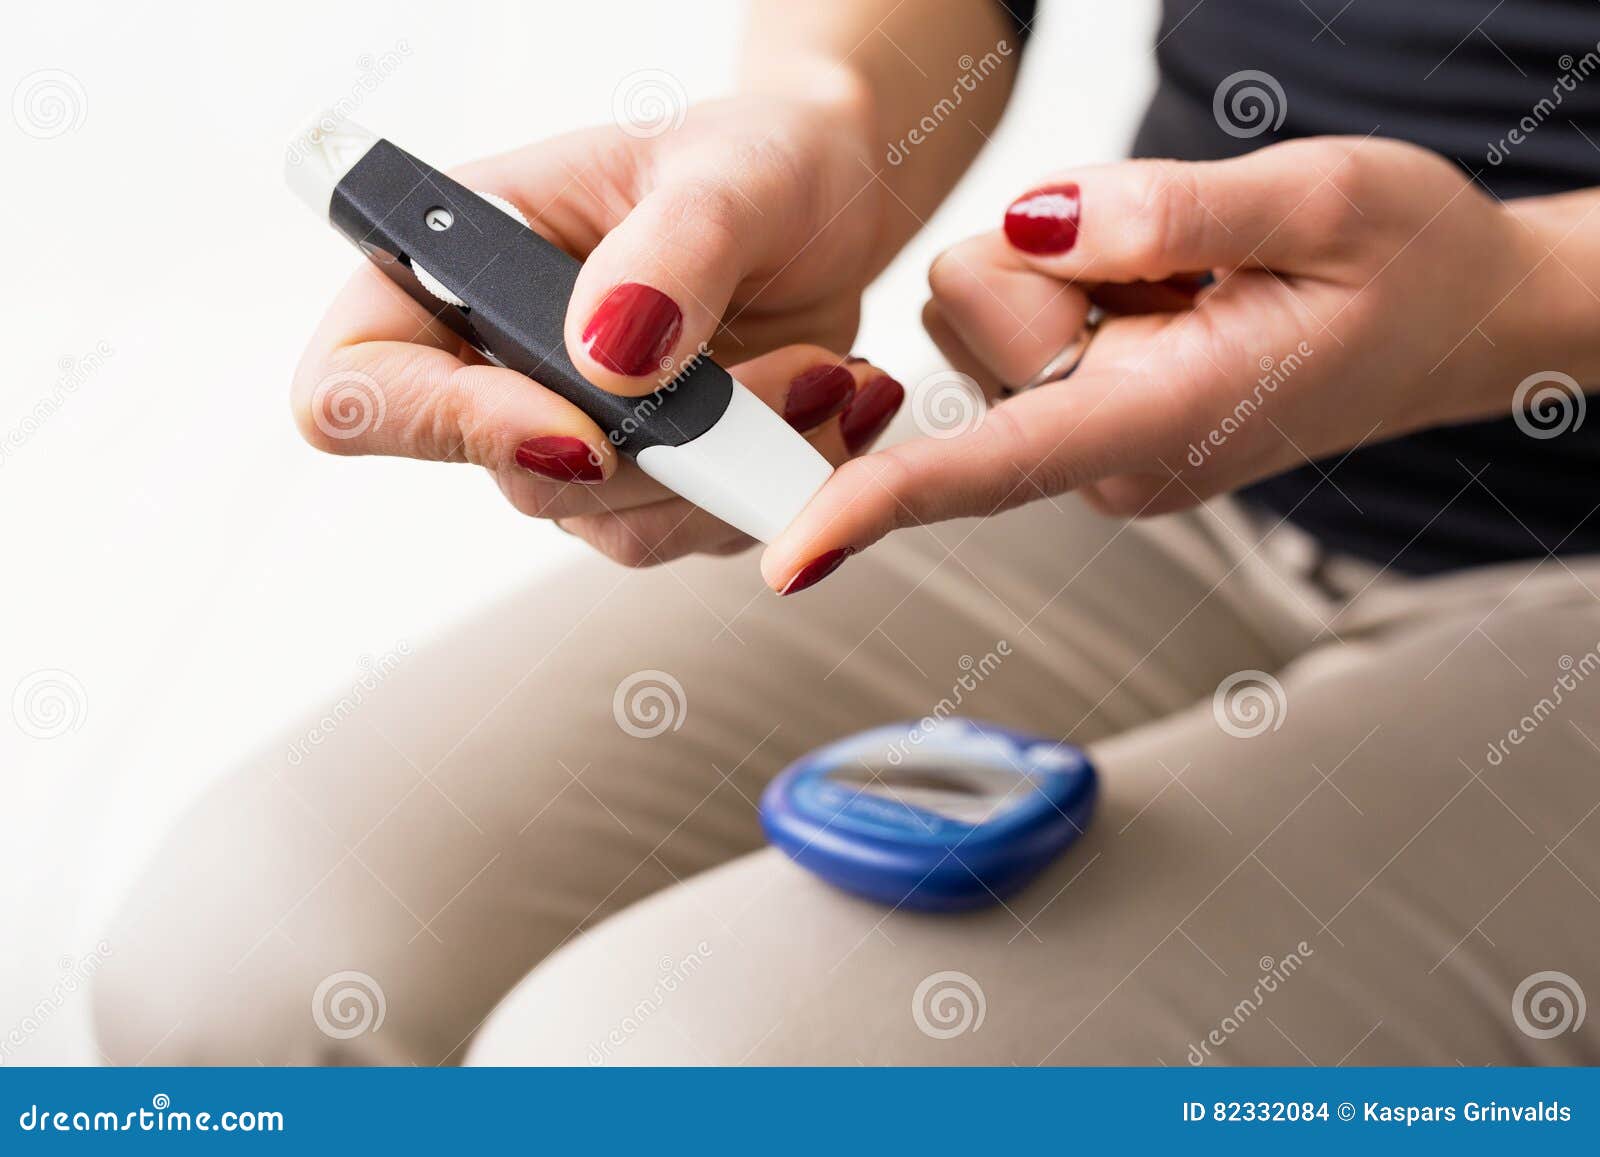 person using diabetes kit